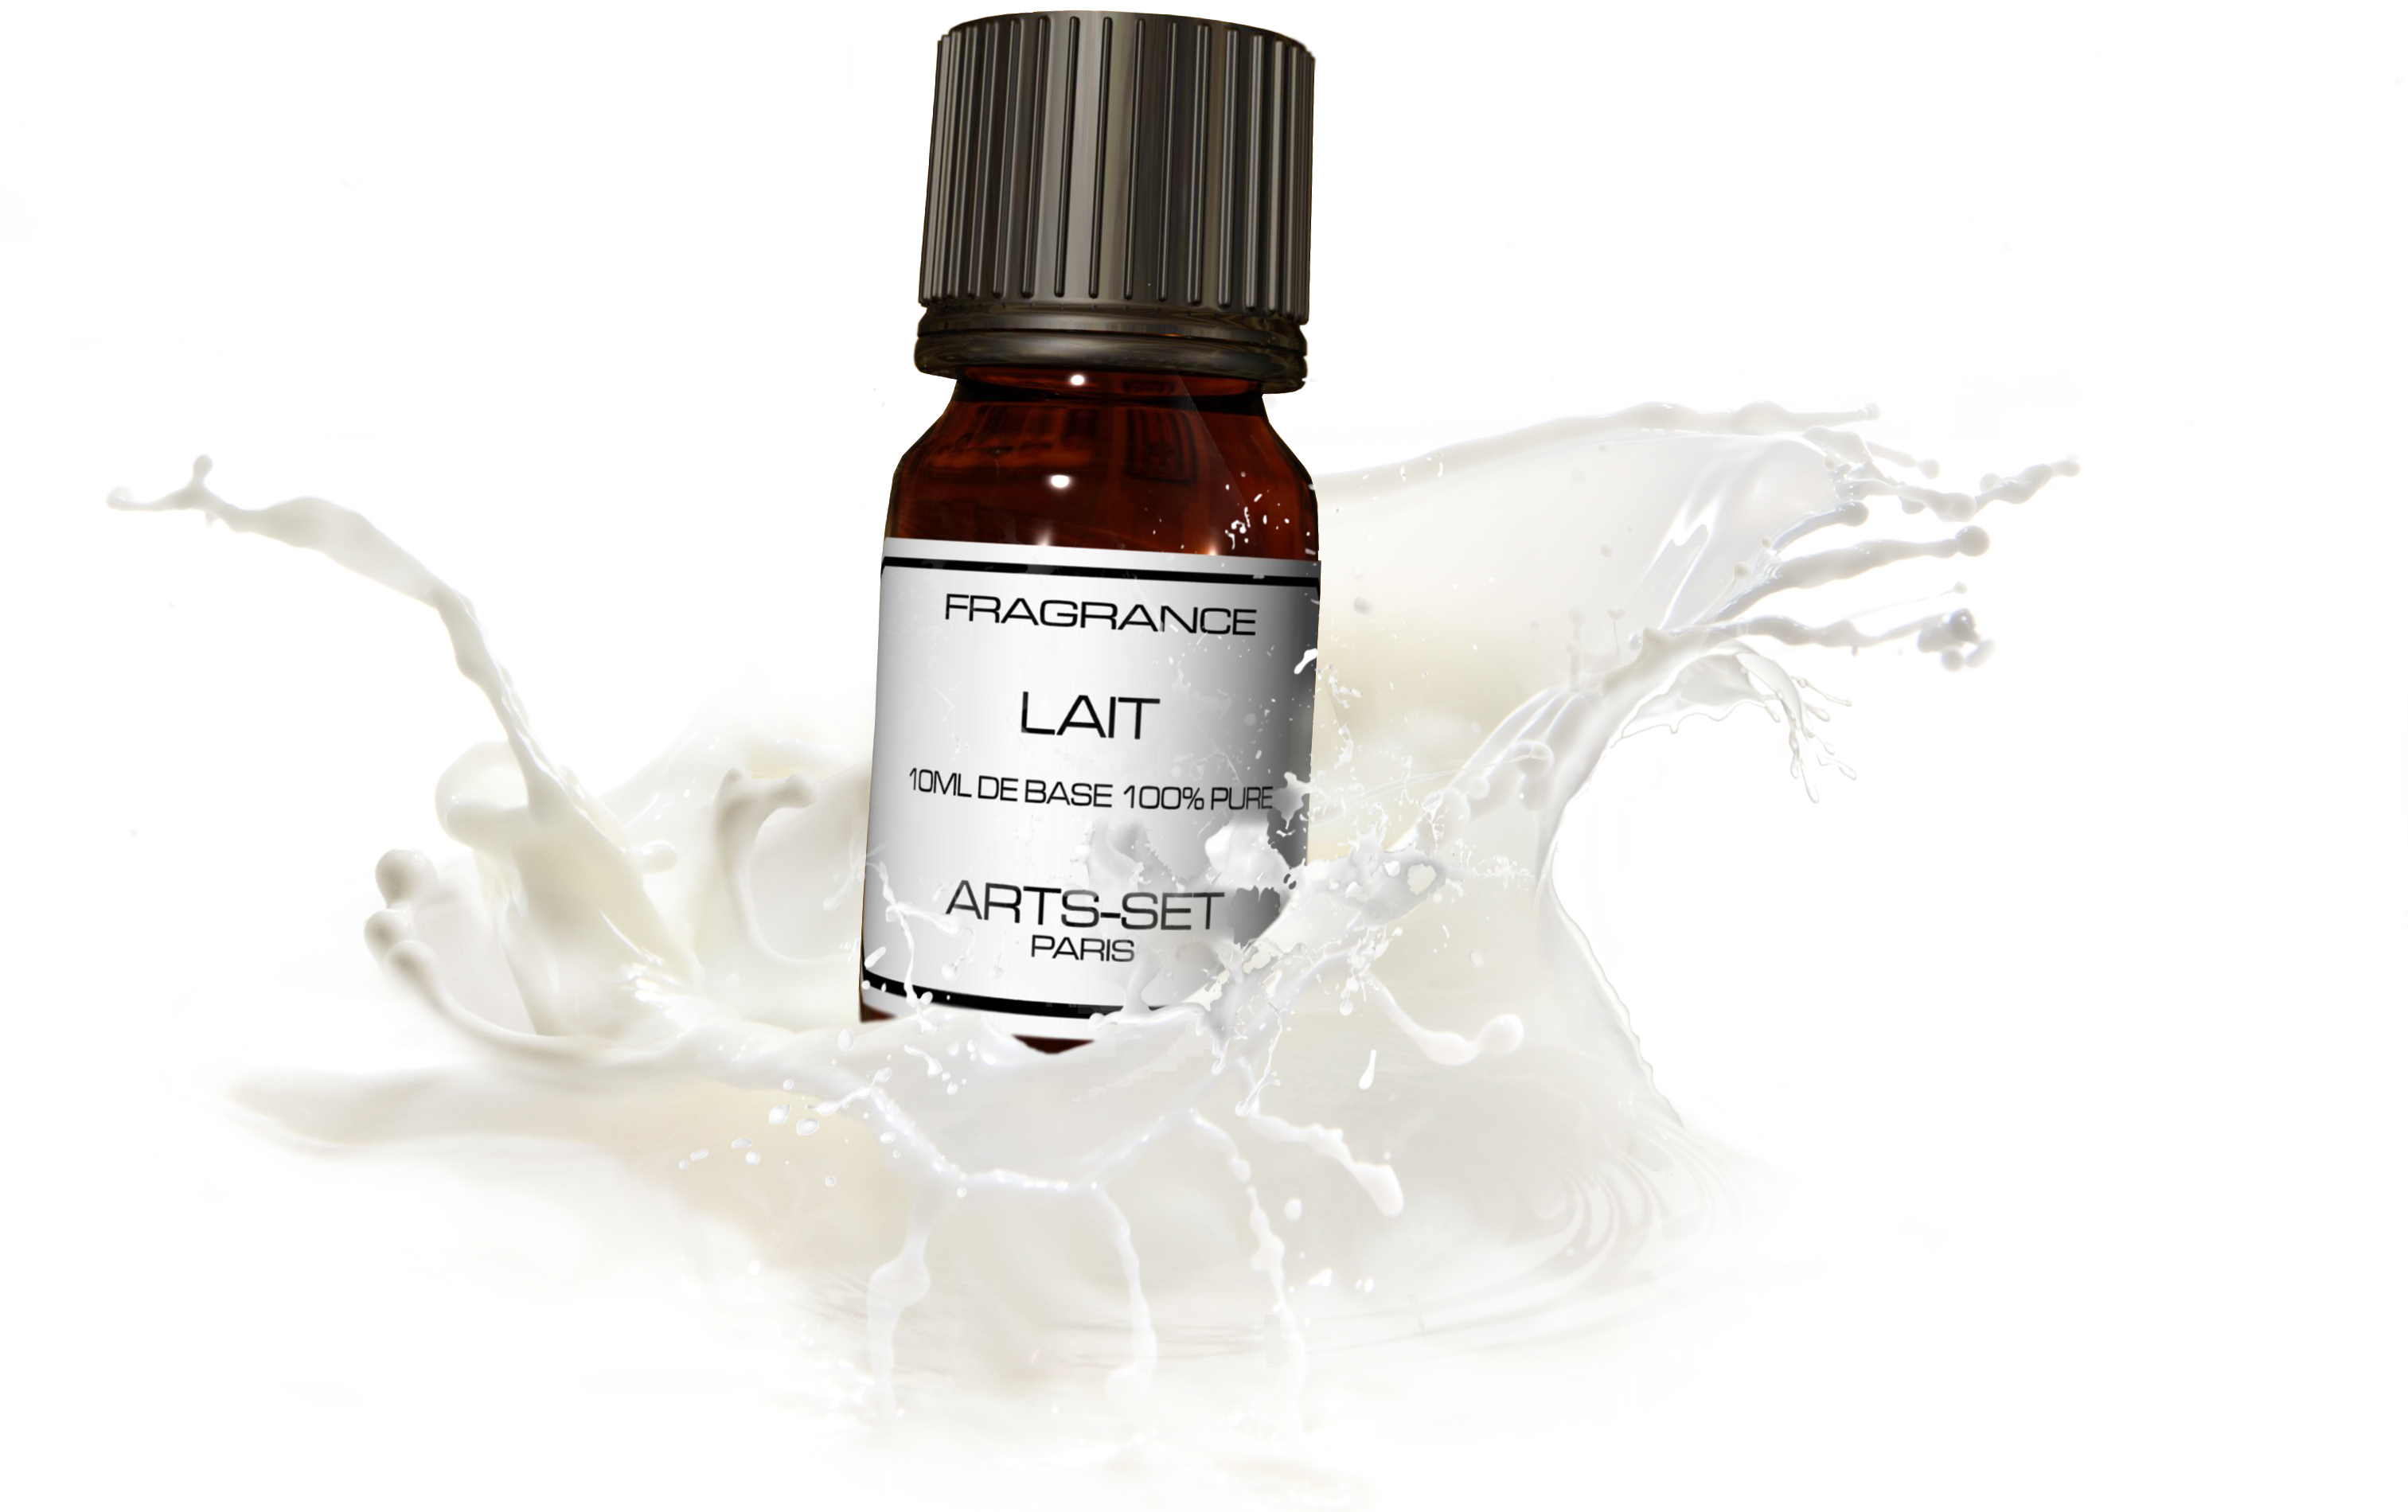 Fragrance Lait Arts-Set